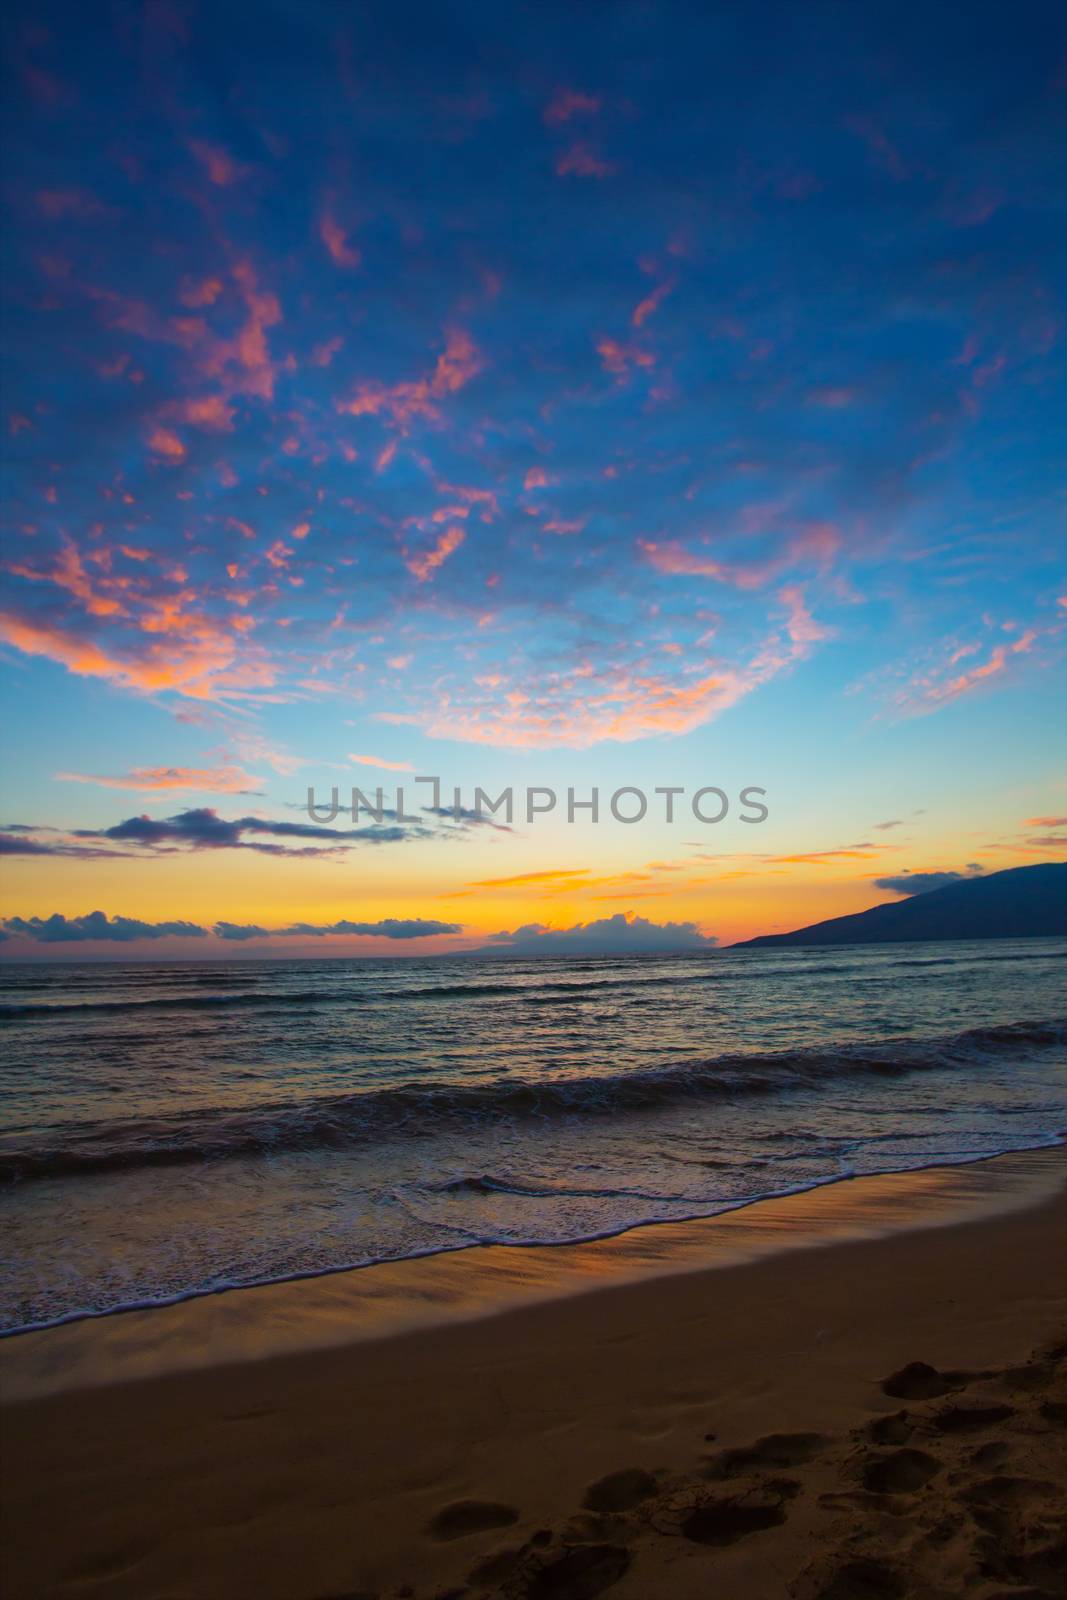 Sunset and beach footprints on Maui in Hawaii